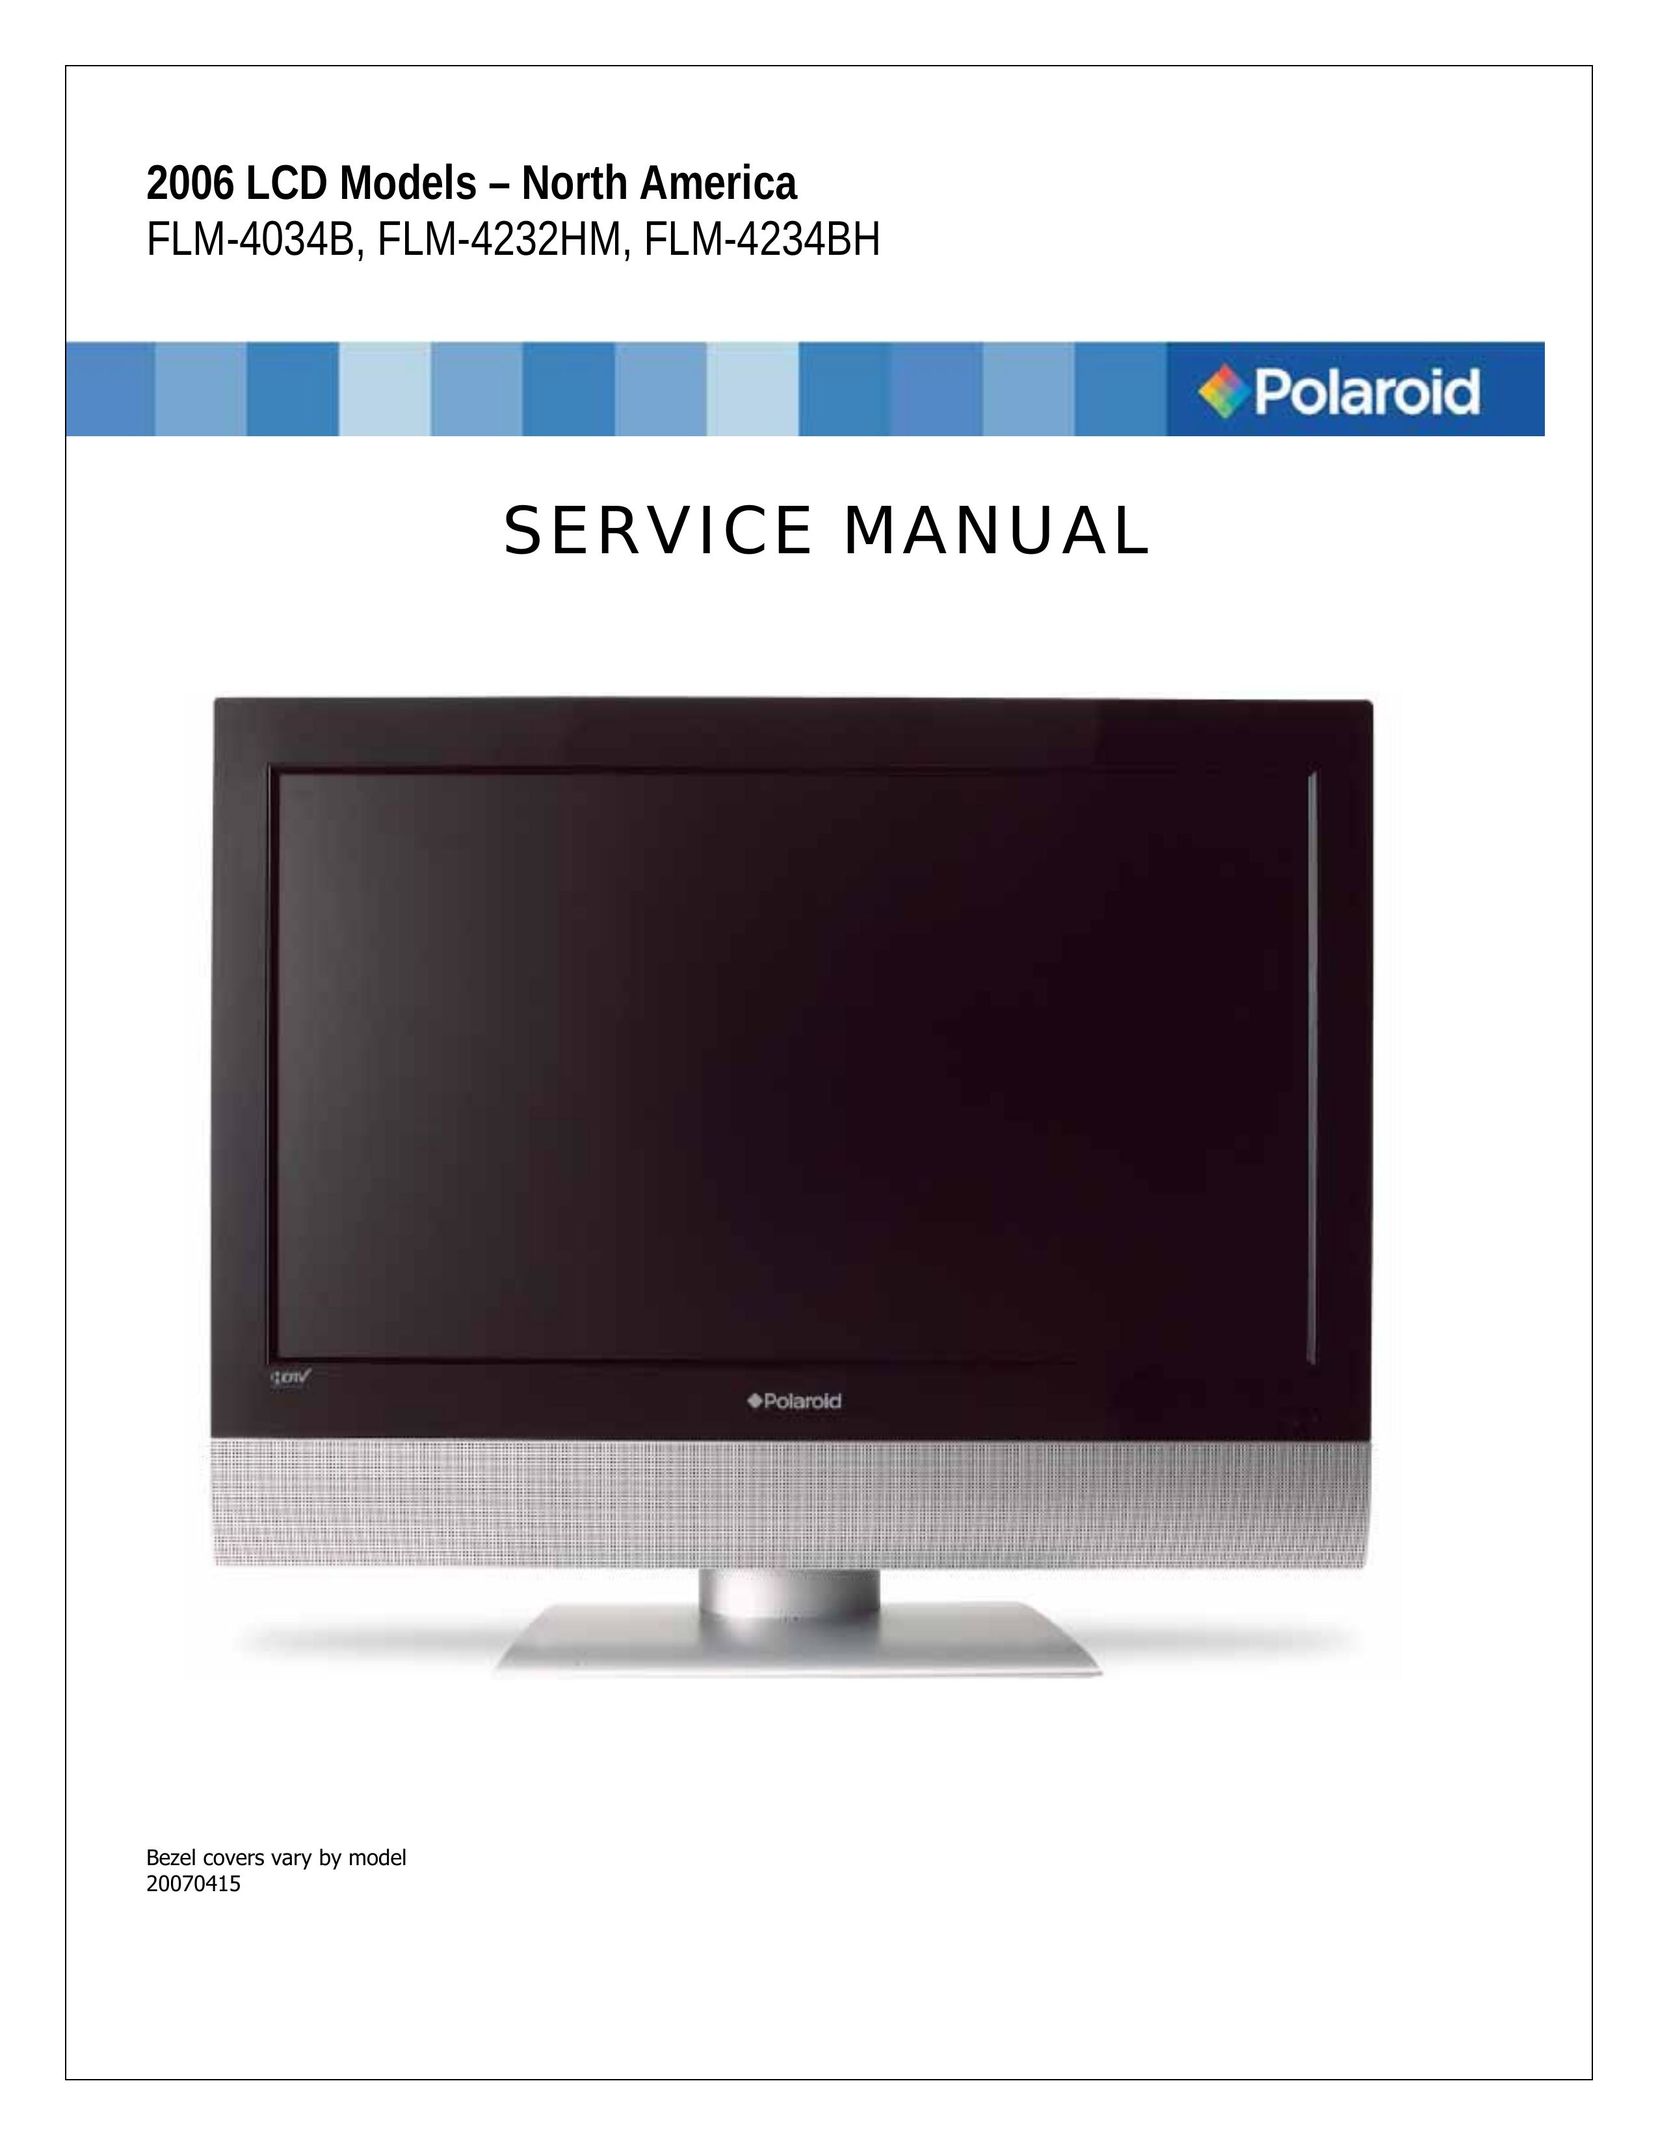 Polaroid FLM-4232HM Flat Panel Television User Manual